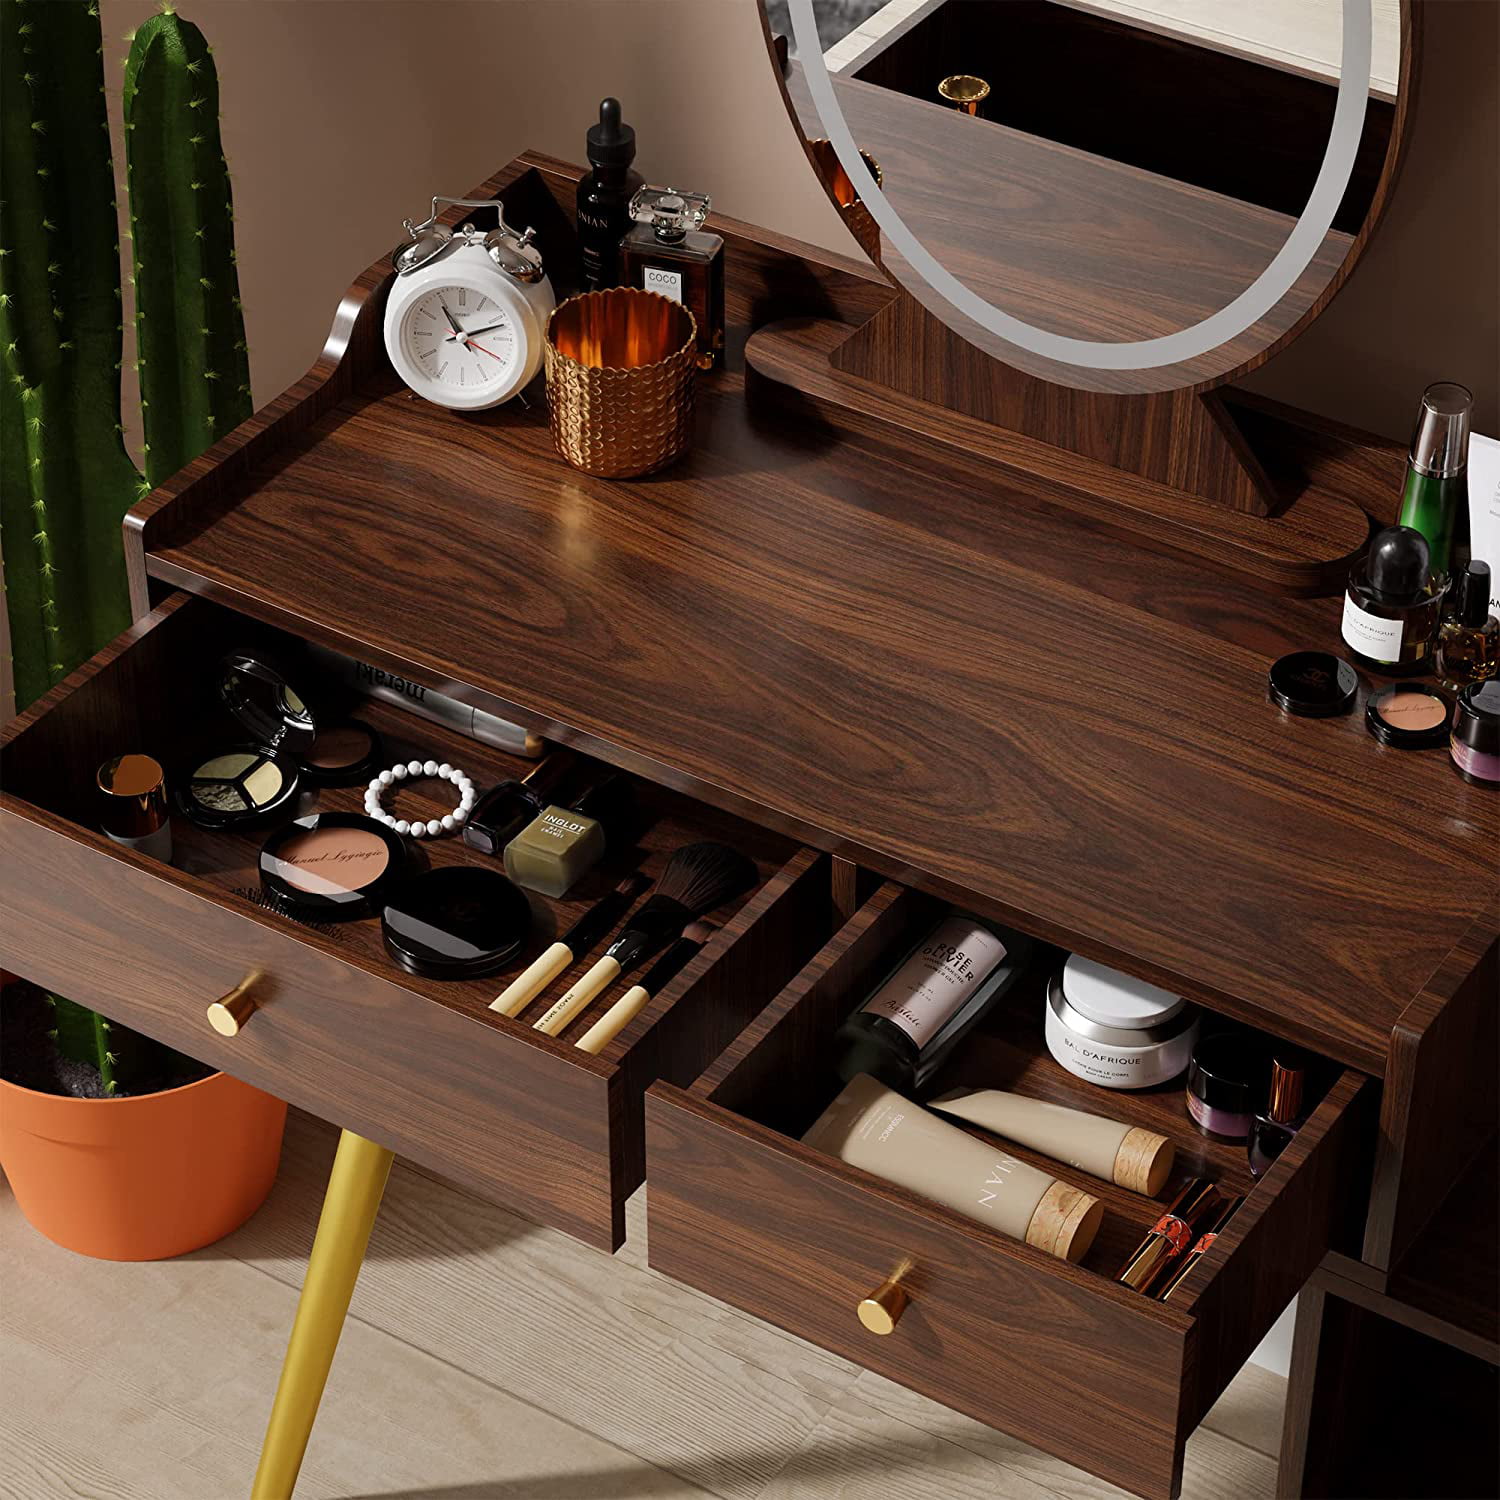 Cozy Castle Vanity Desk with Lighted Mirror, Makeup Vanity Table